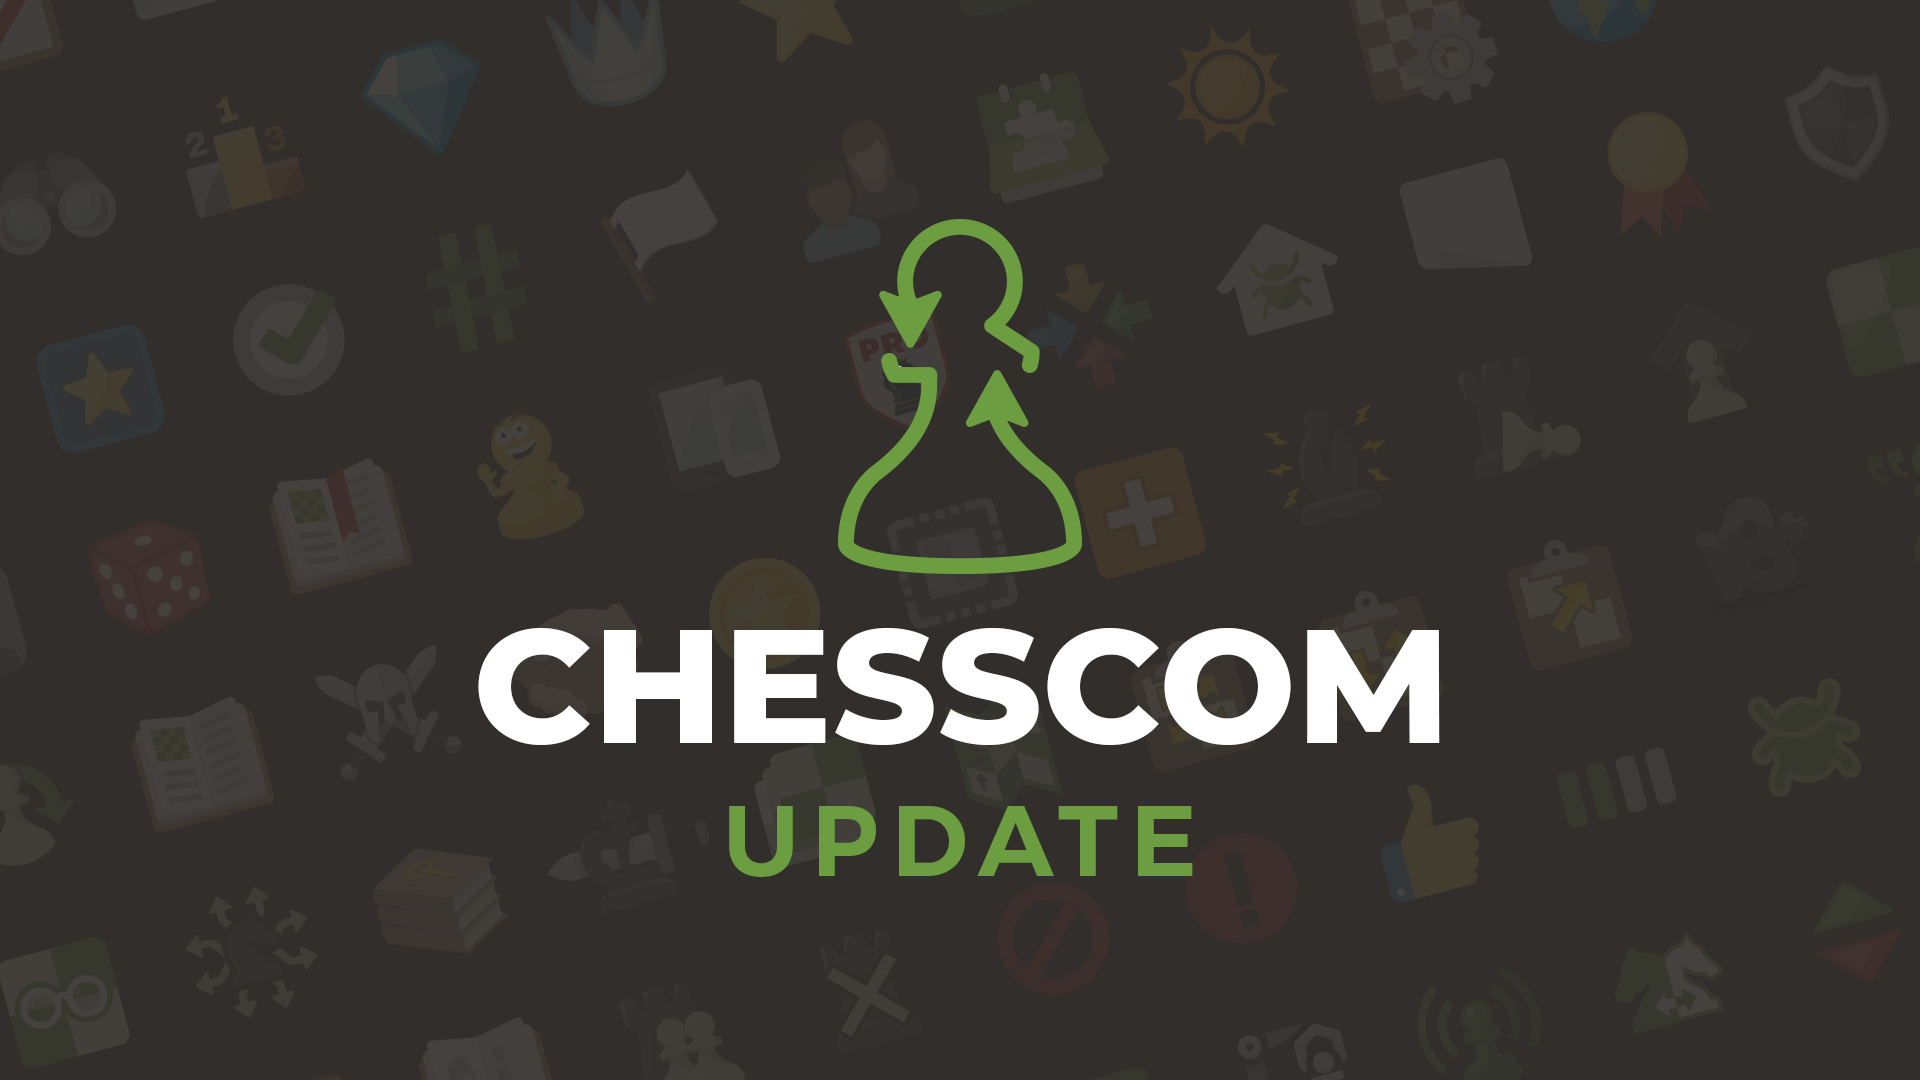 Making Sense of the Chess.com Redesign Contest